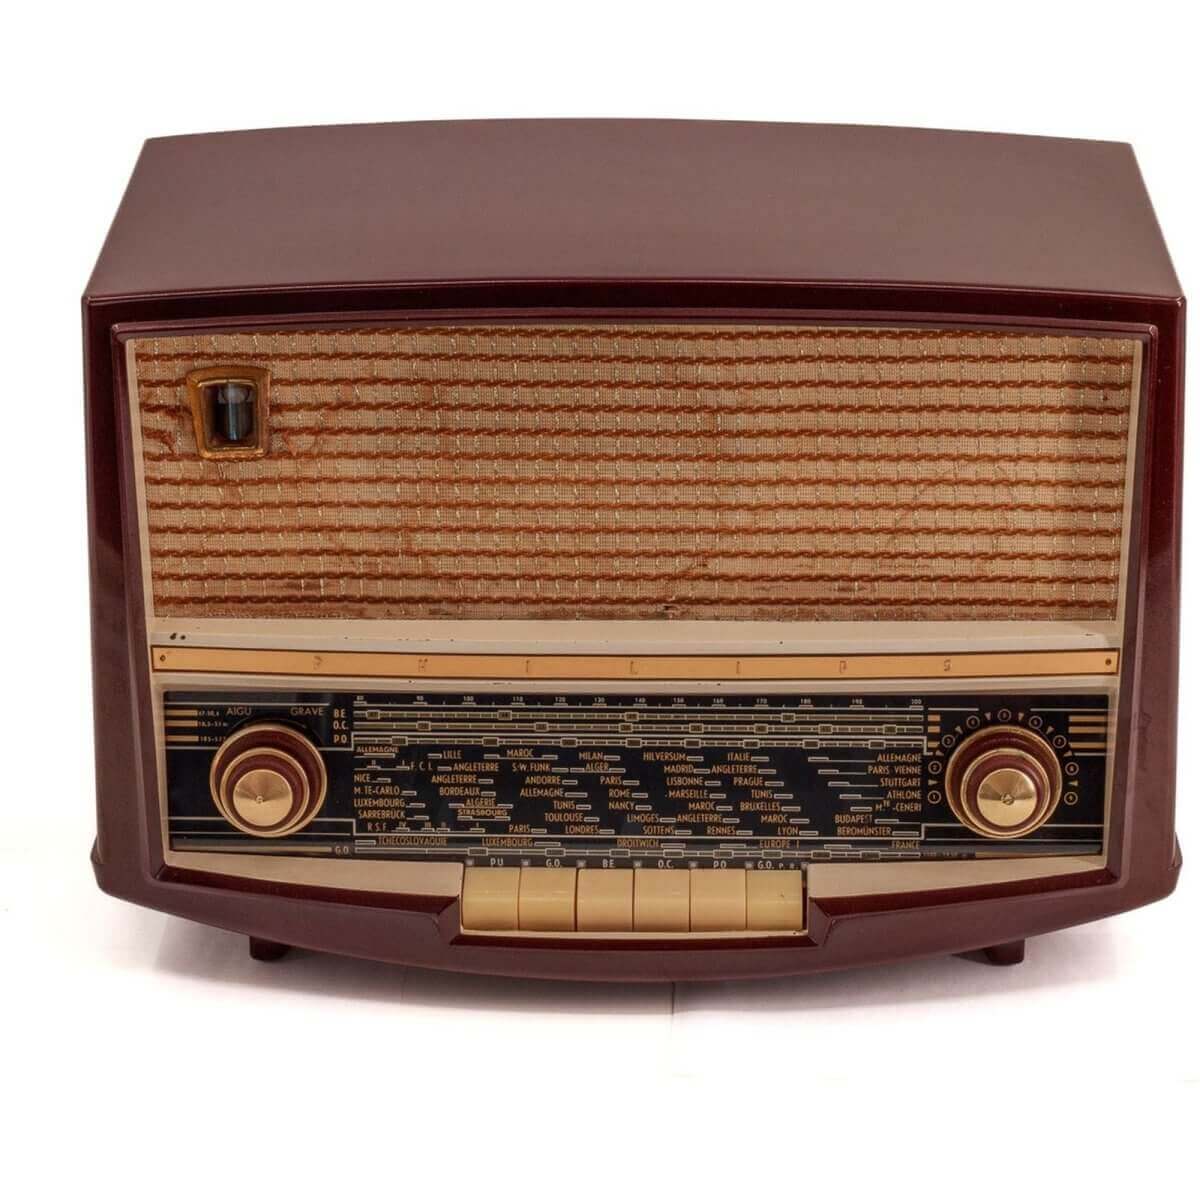 Radio Bluetooth Philips Vintage 60’S enceinte connectée bluetooth haut de gamme prodige radio vintage design